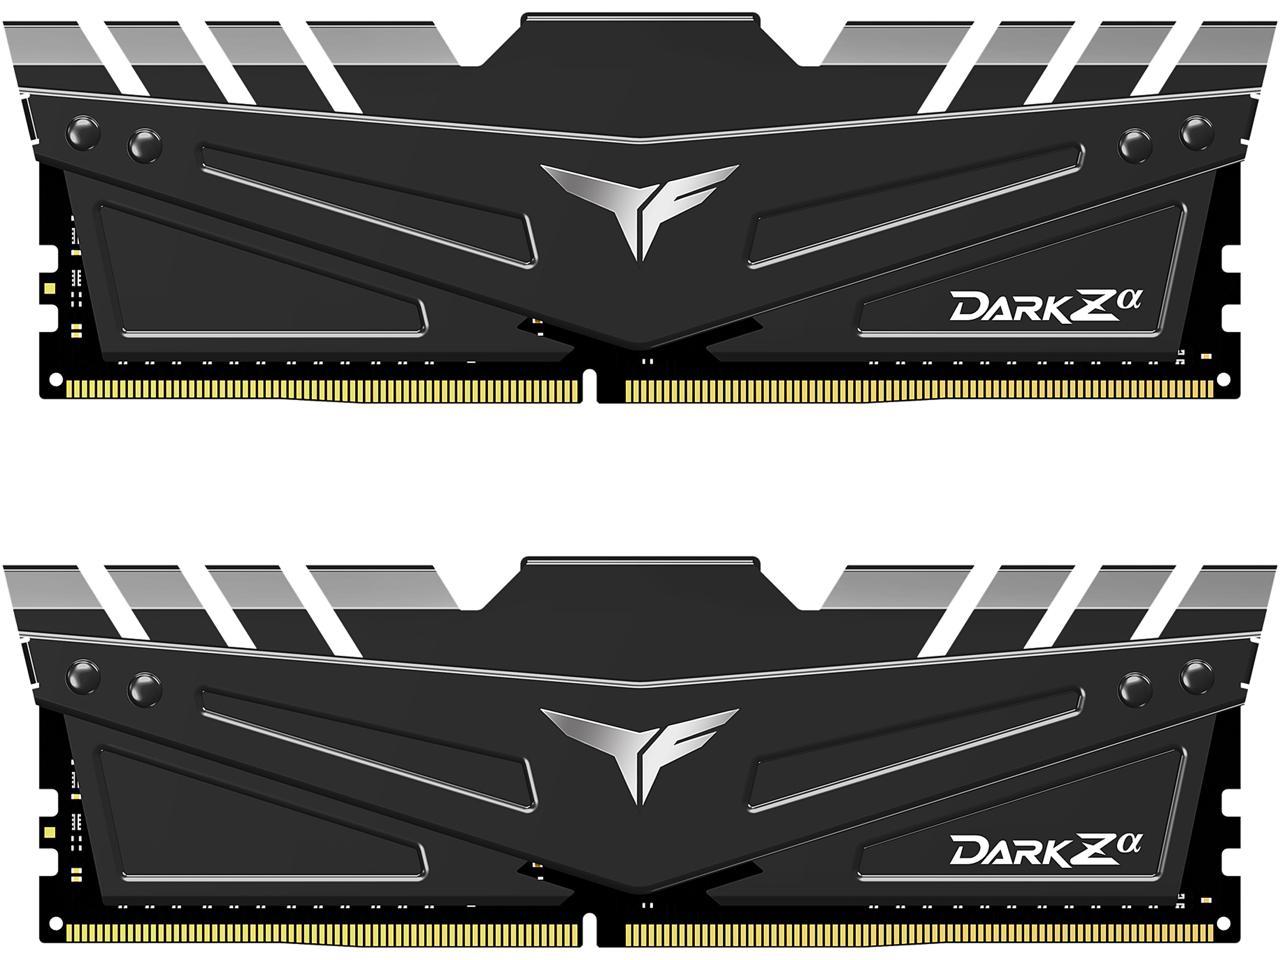 16GB (2x8GB) Team T-FORCE DARK Za DDR4 3600 Desktop Memory $54 + Free Shipping $55